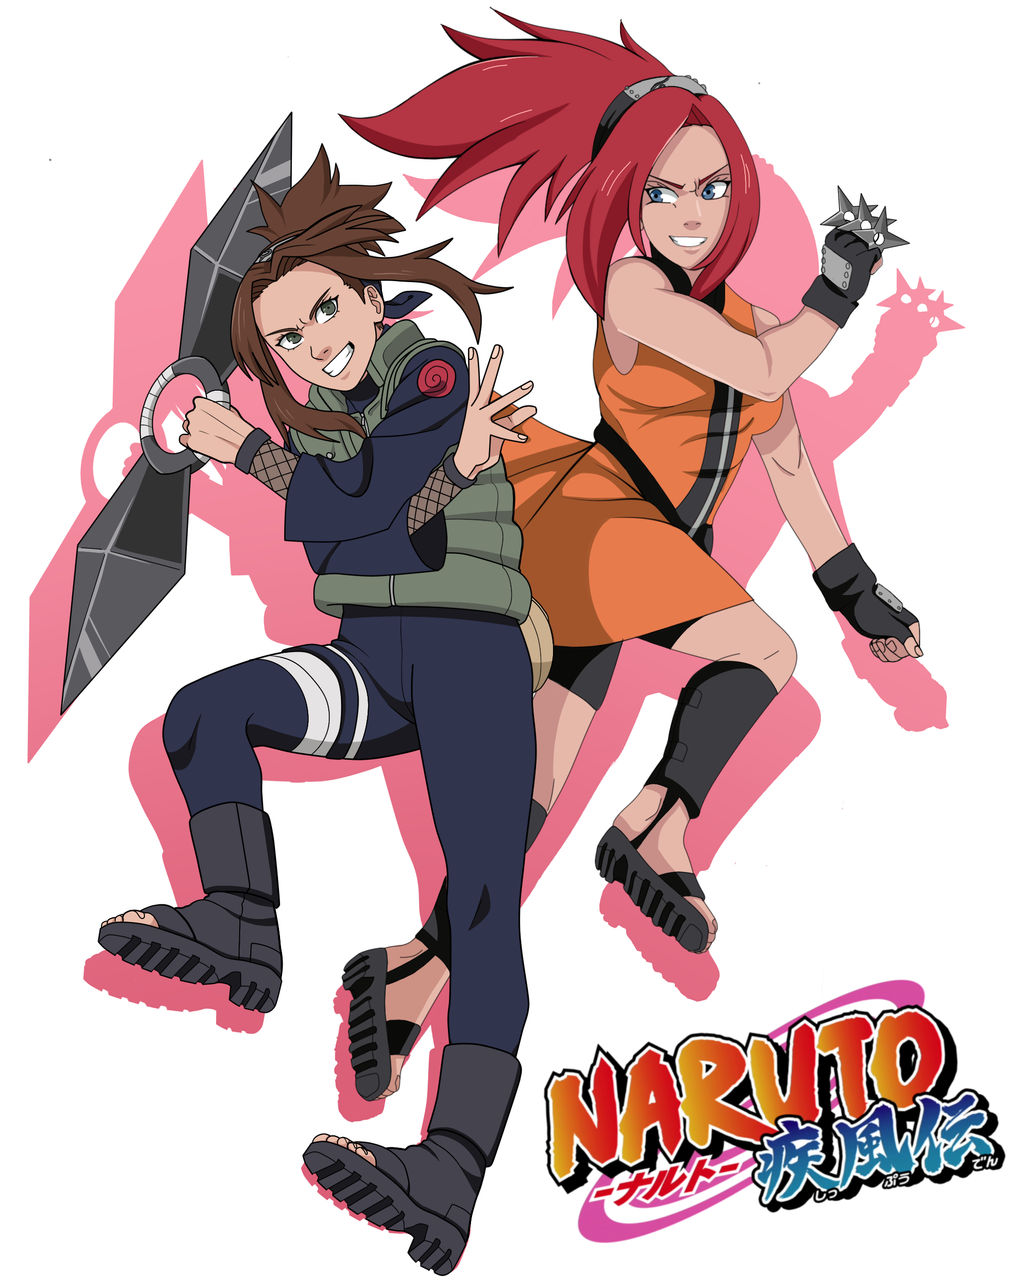 Naruto Shippuden by st-anger-anime on DeviantArt